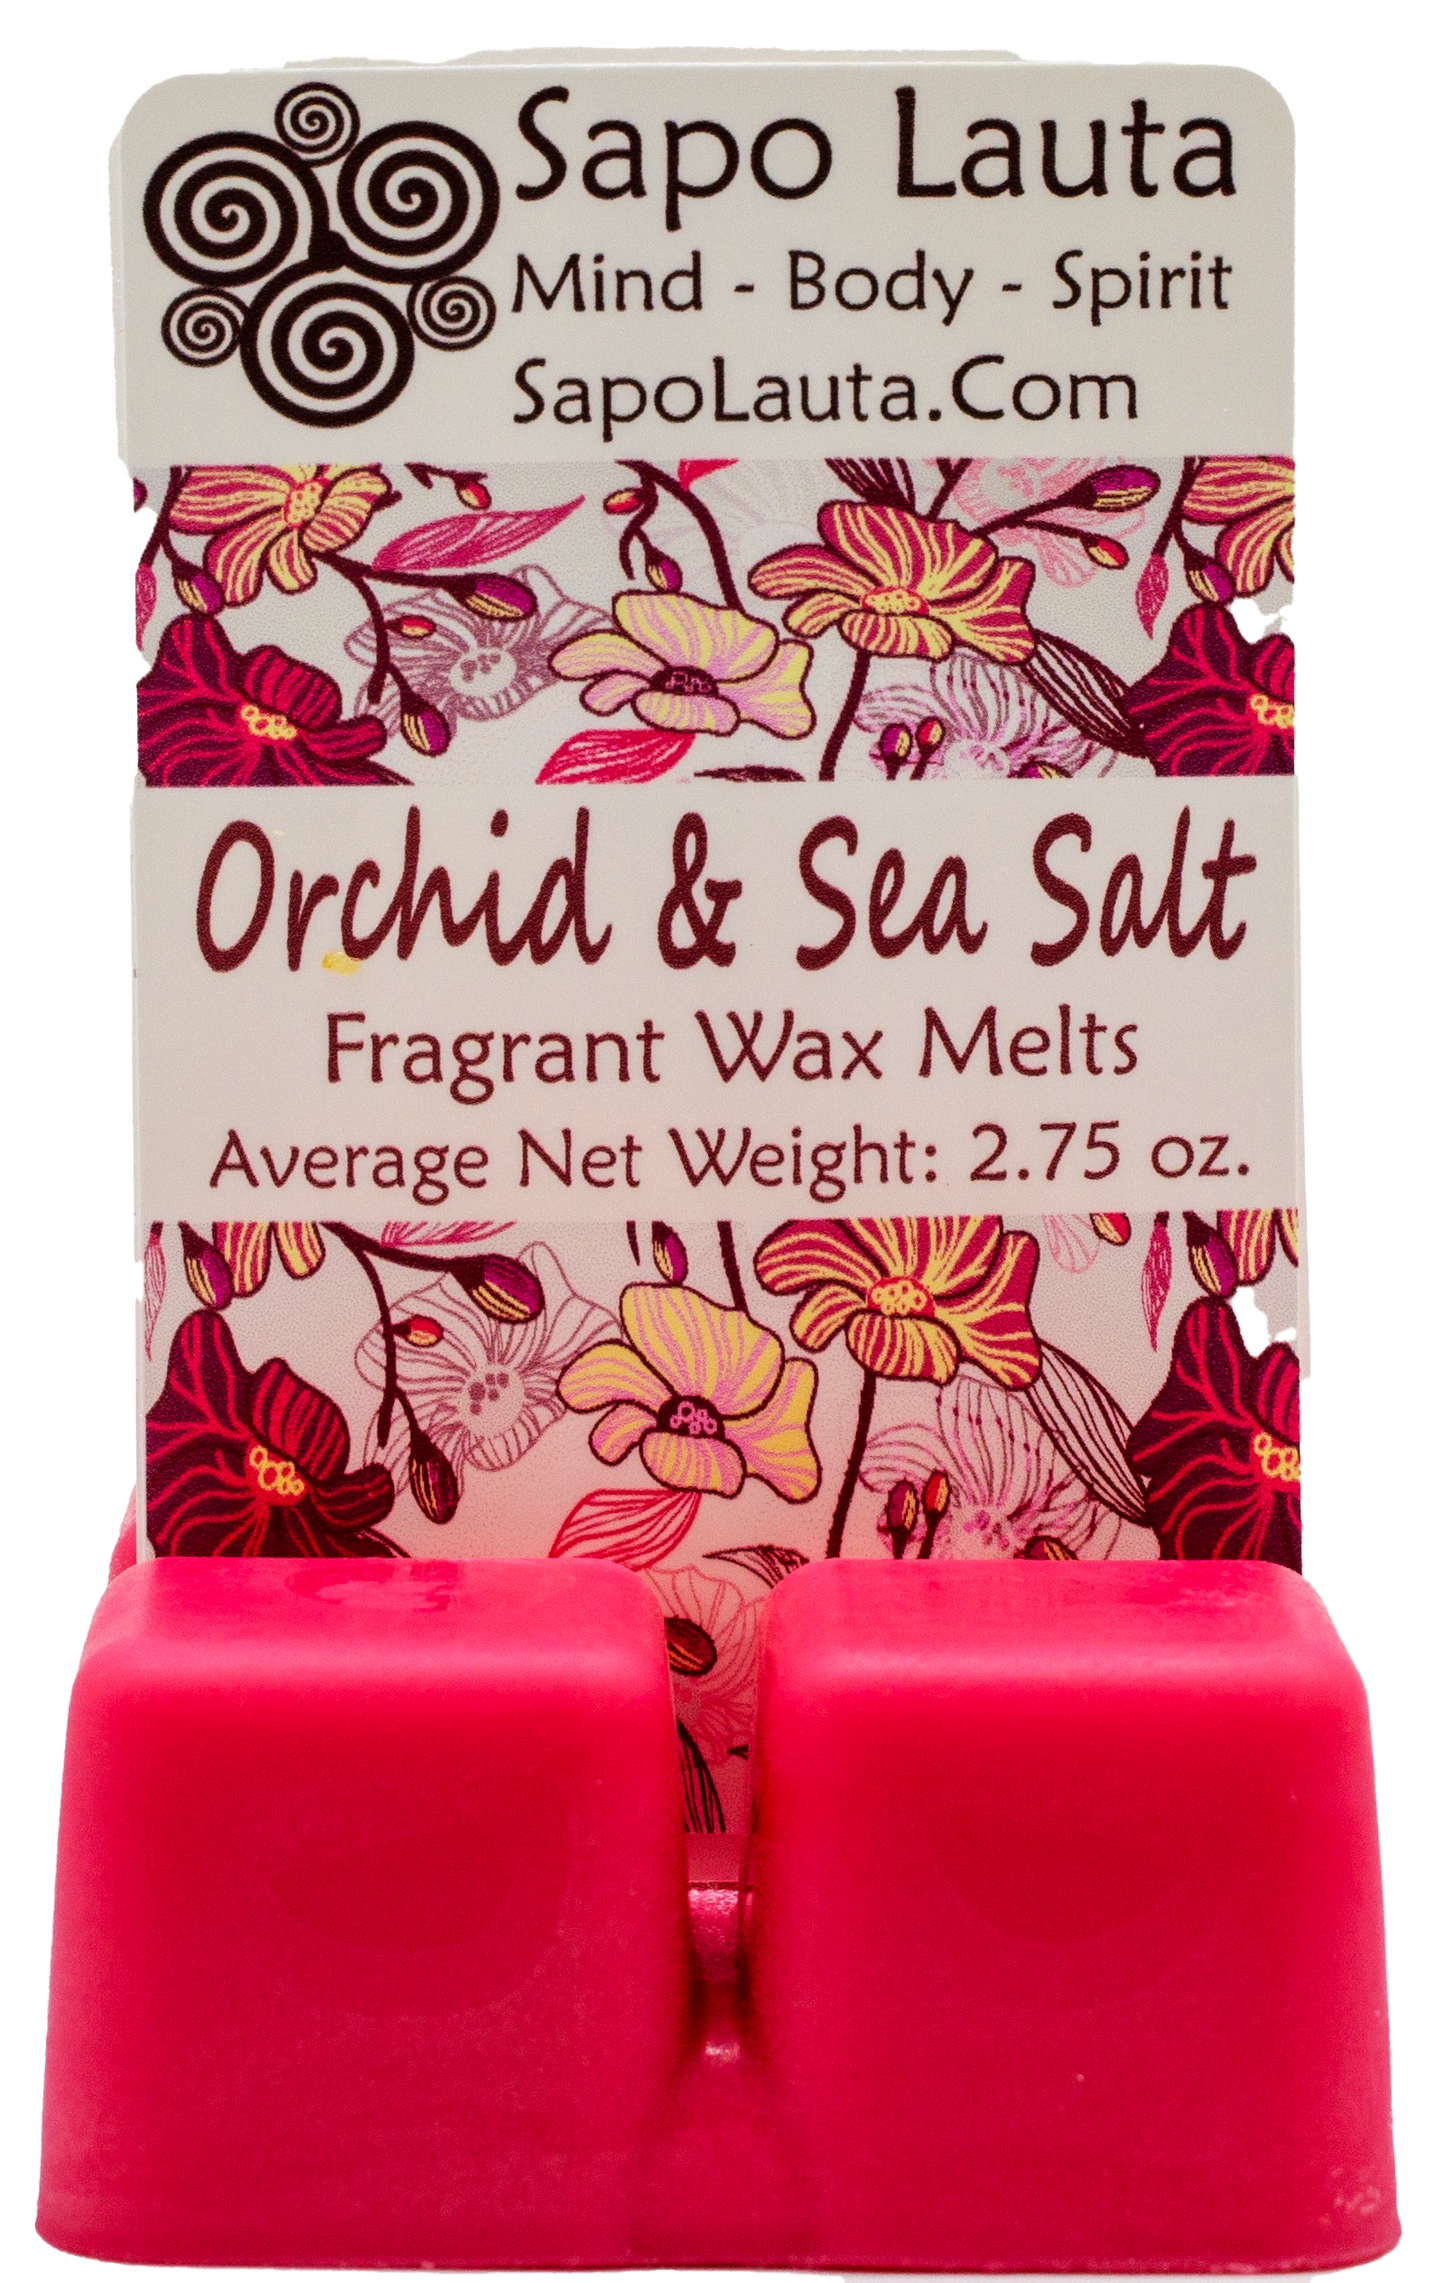 Orchid & Sea Salt Fragrant Wax Melt